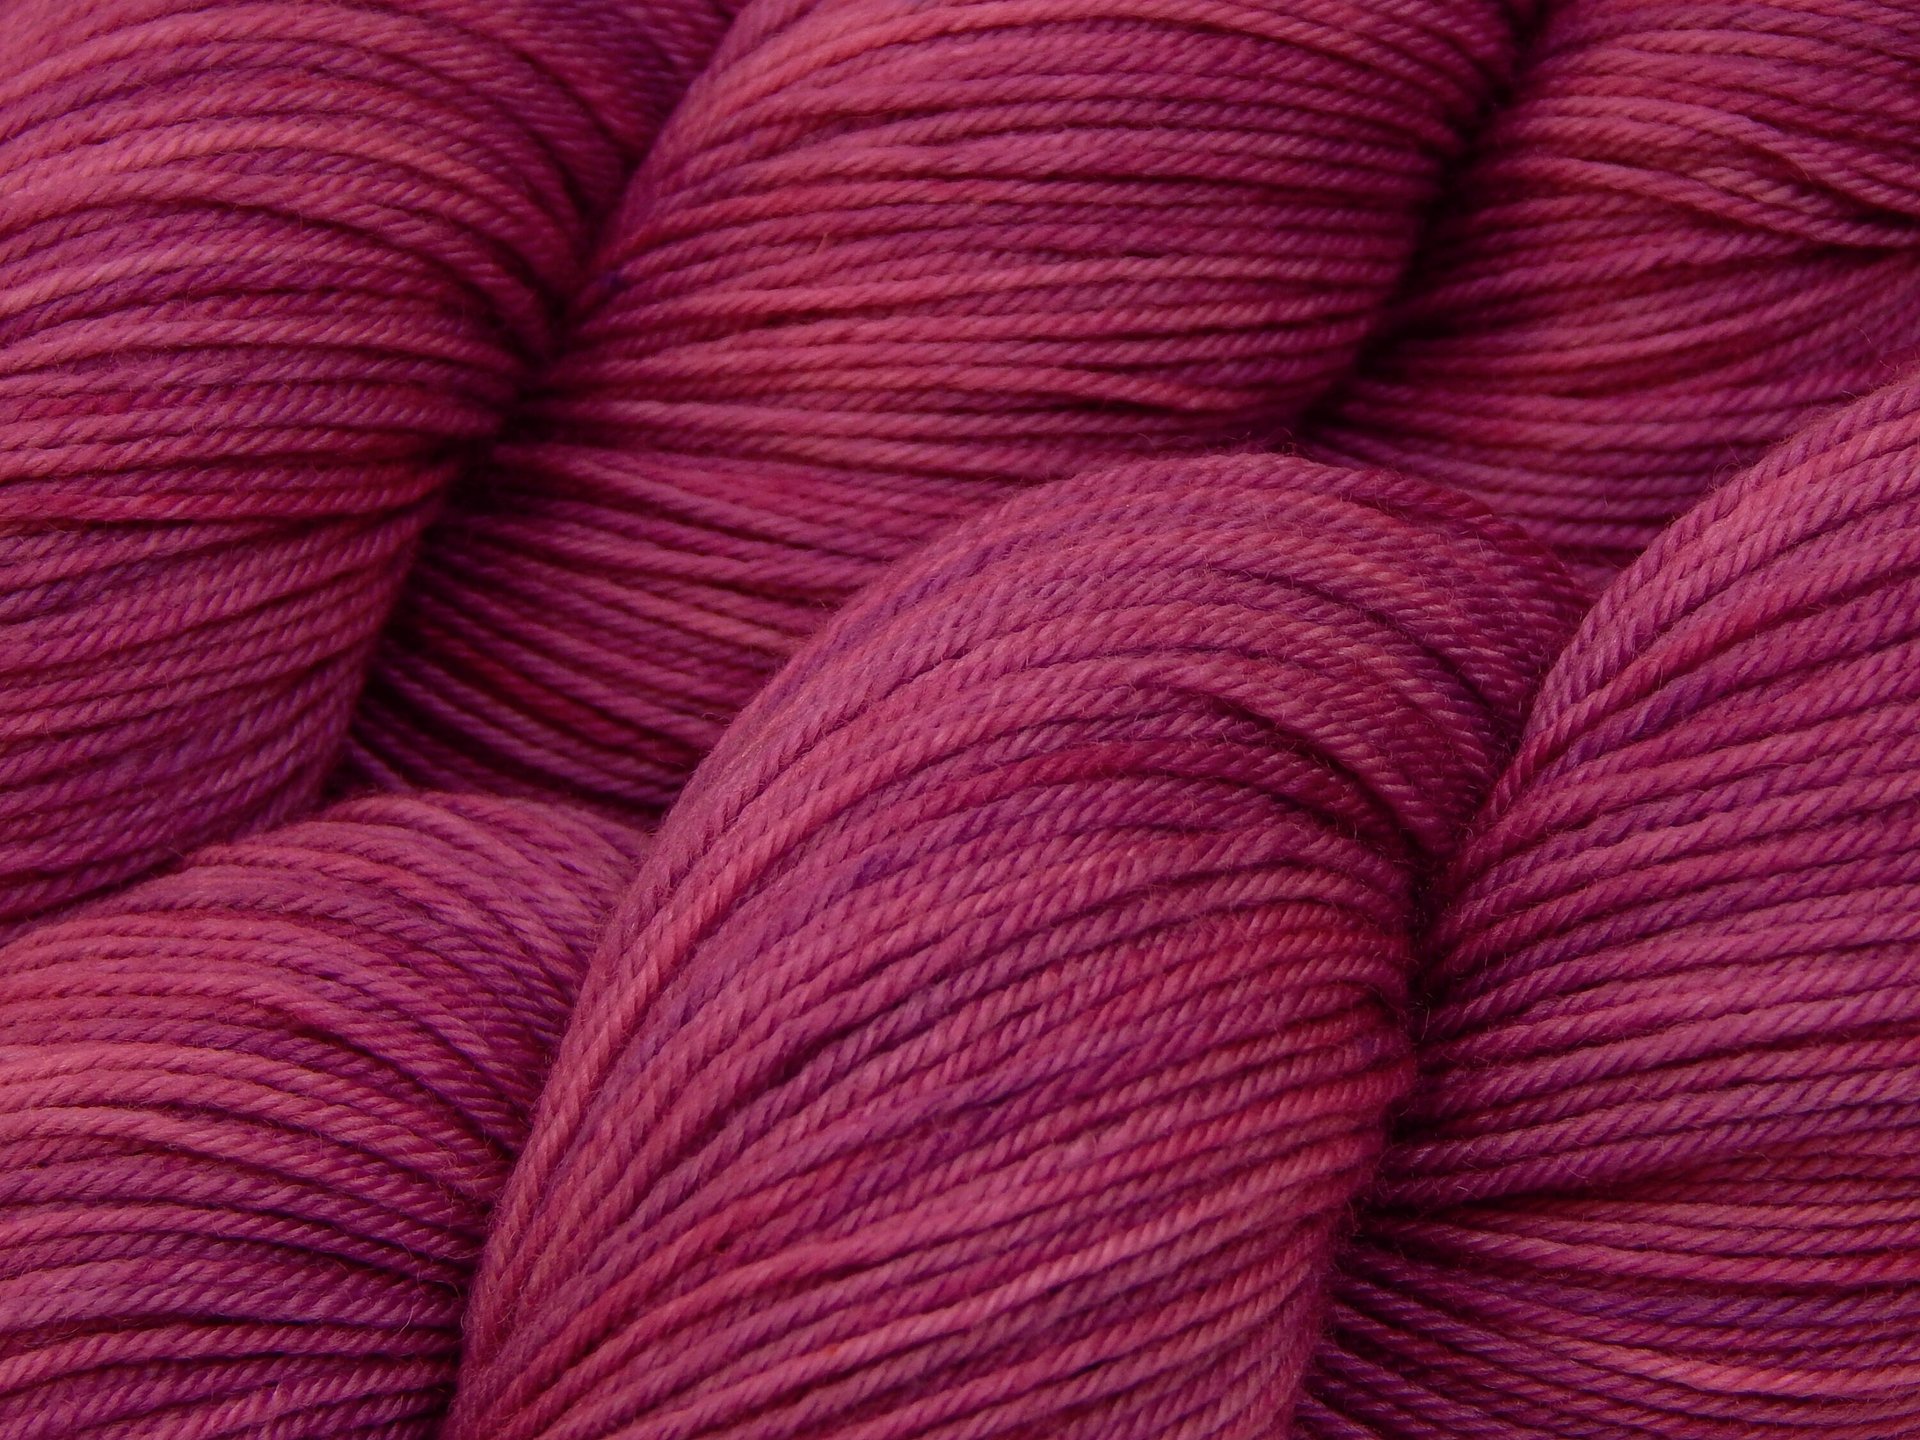 Hand Dyed Yarn, Sock Fingering Weight 4 Ply Superwash Merino Wool - Orchid - Deep Magenta Tonal Knitting Yarn, Bright Saturated Sock Yarn